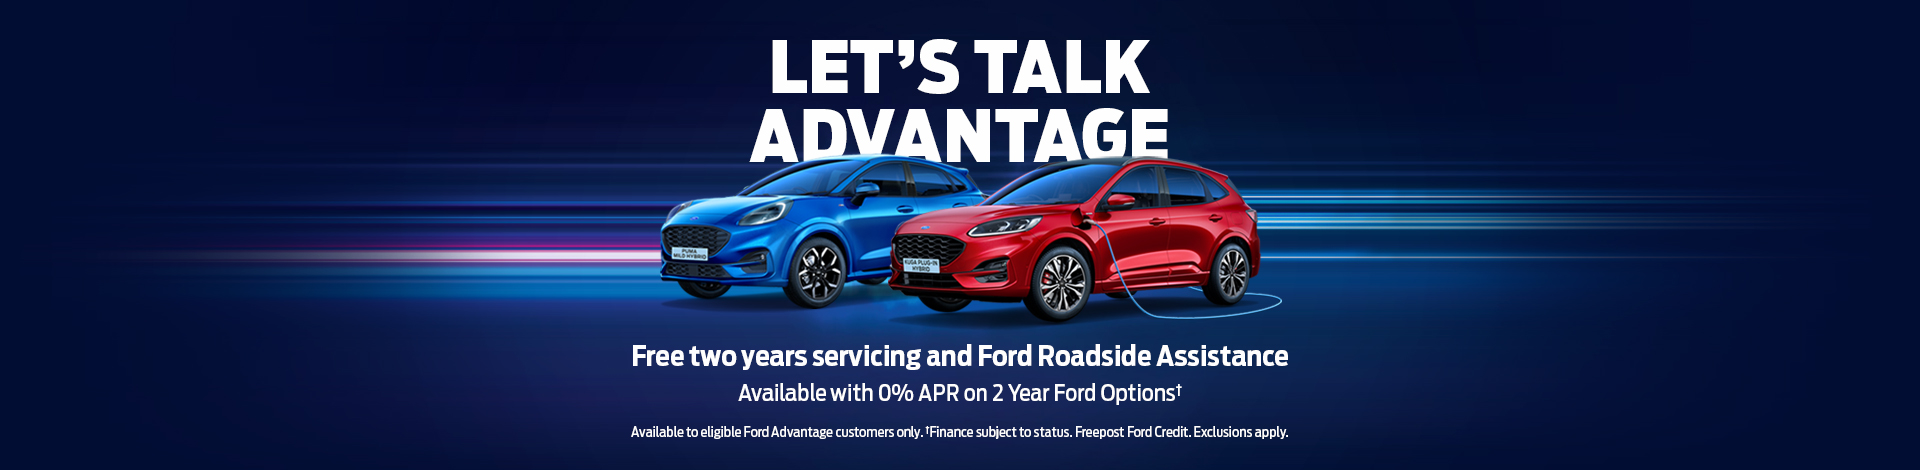 Ford Advantage